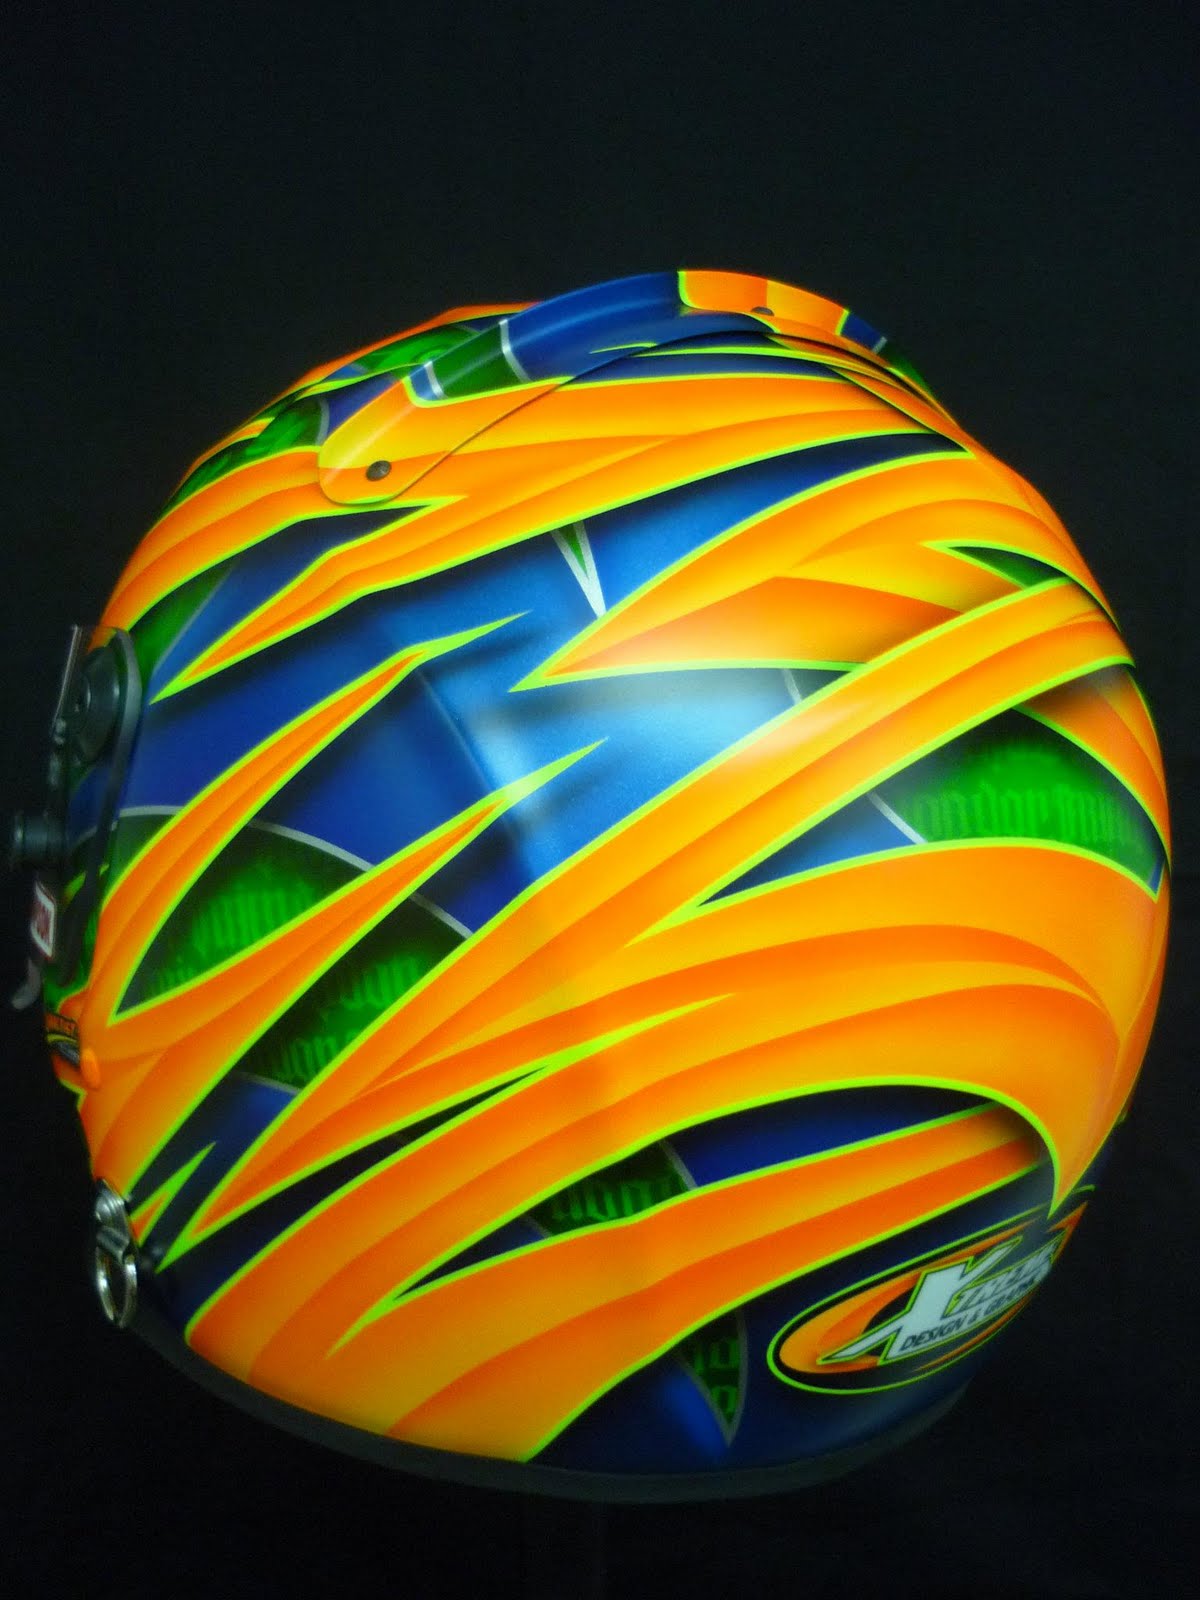 Racing Helmets Garage: Simpson Speedway Shark J.Friend 2011 by The ...